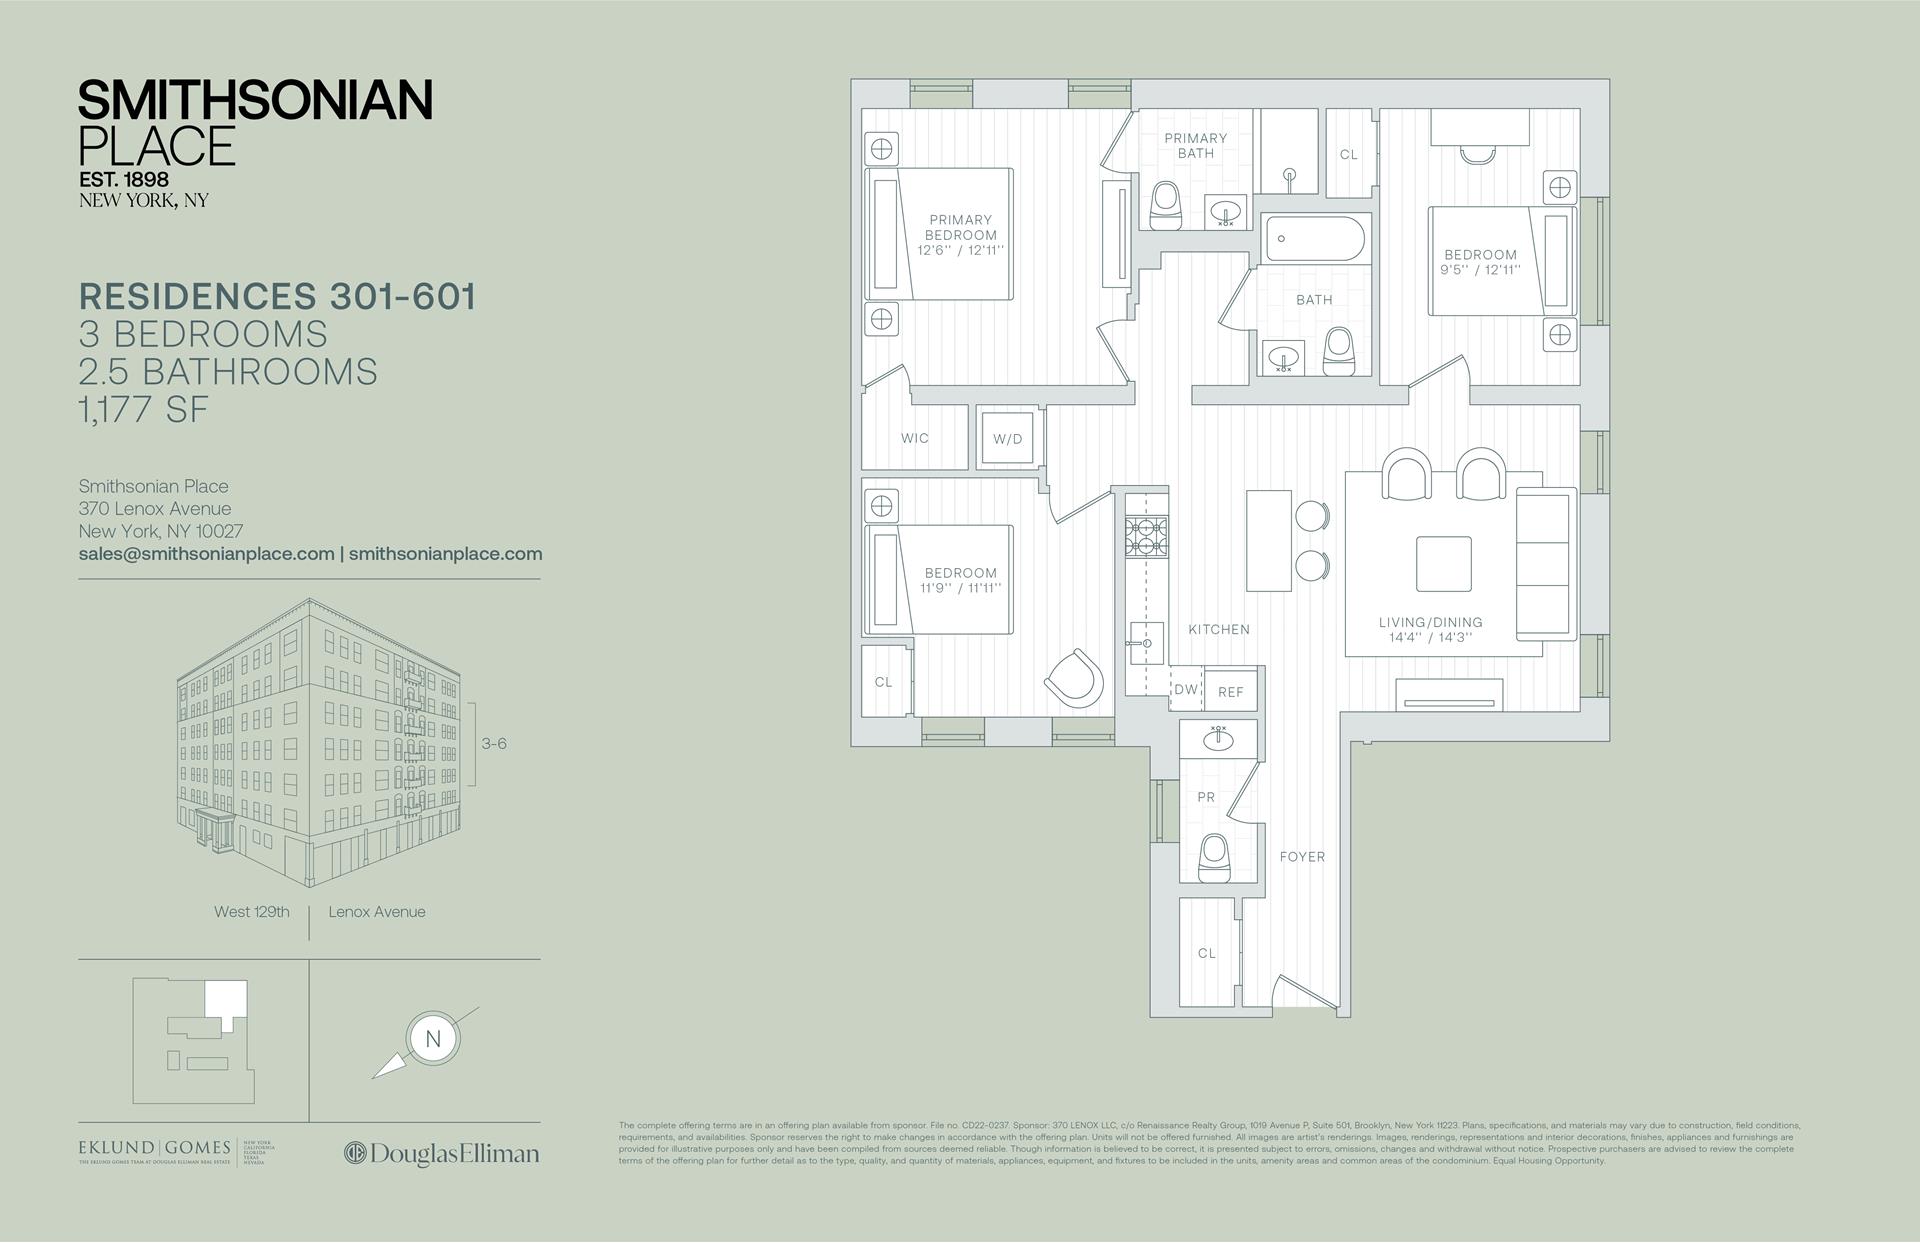 Floorplan for 370 Lenox Avenue, 301